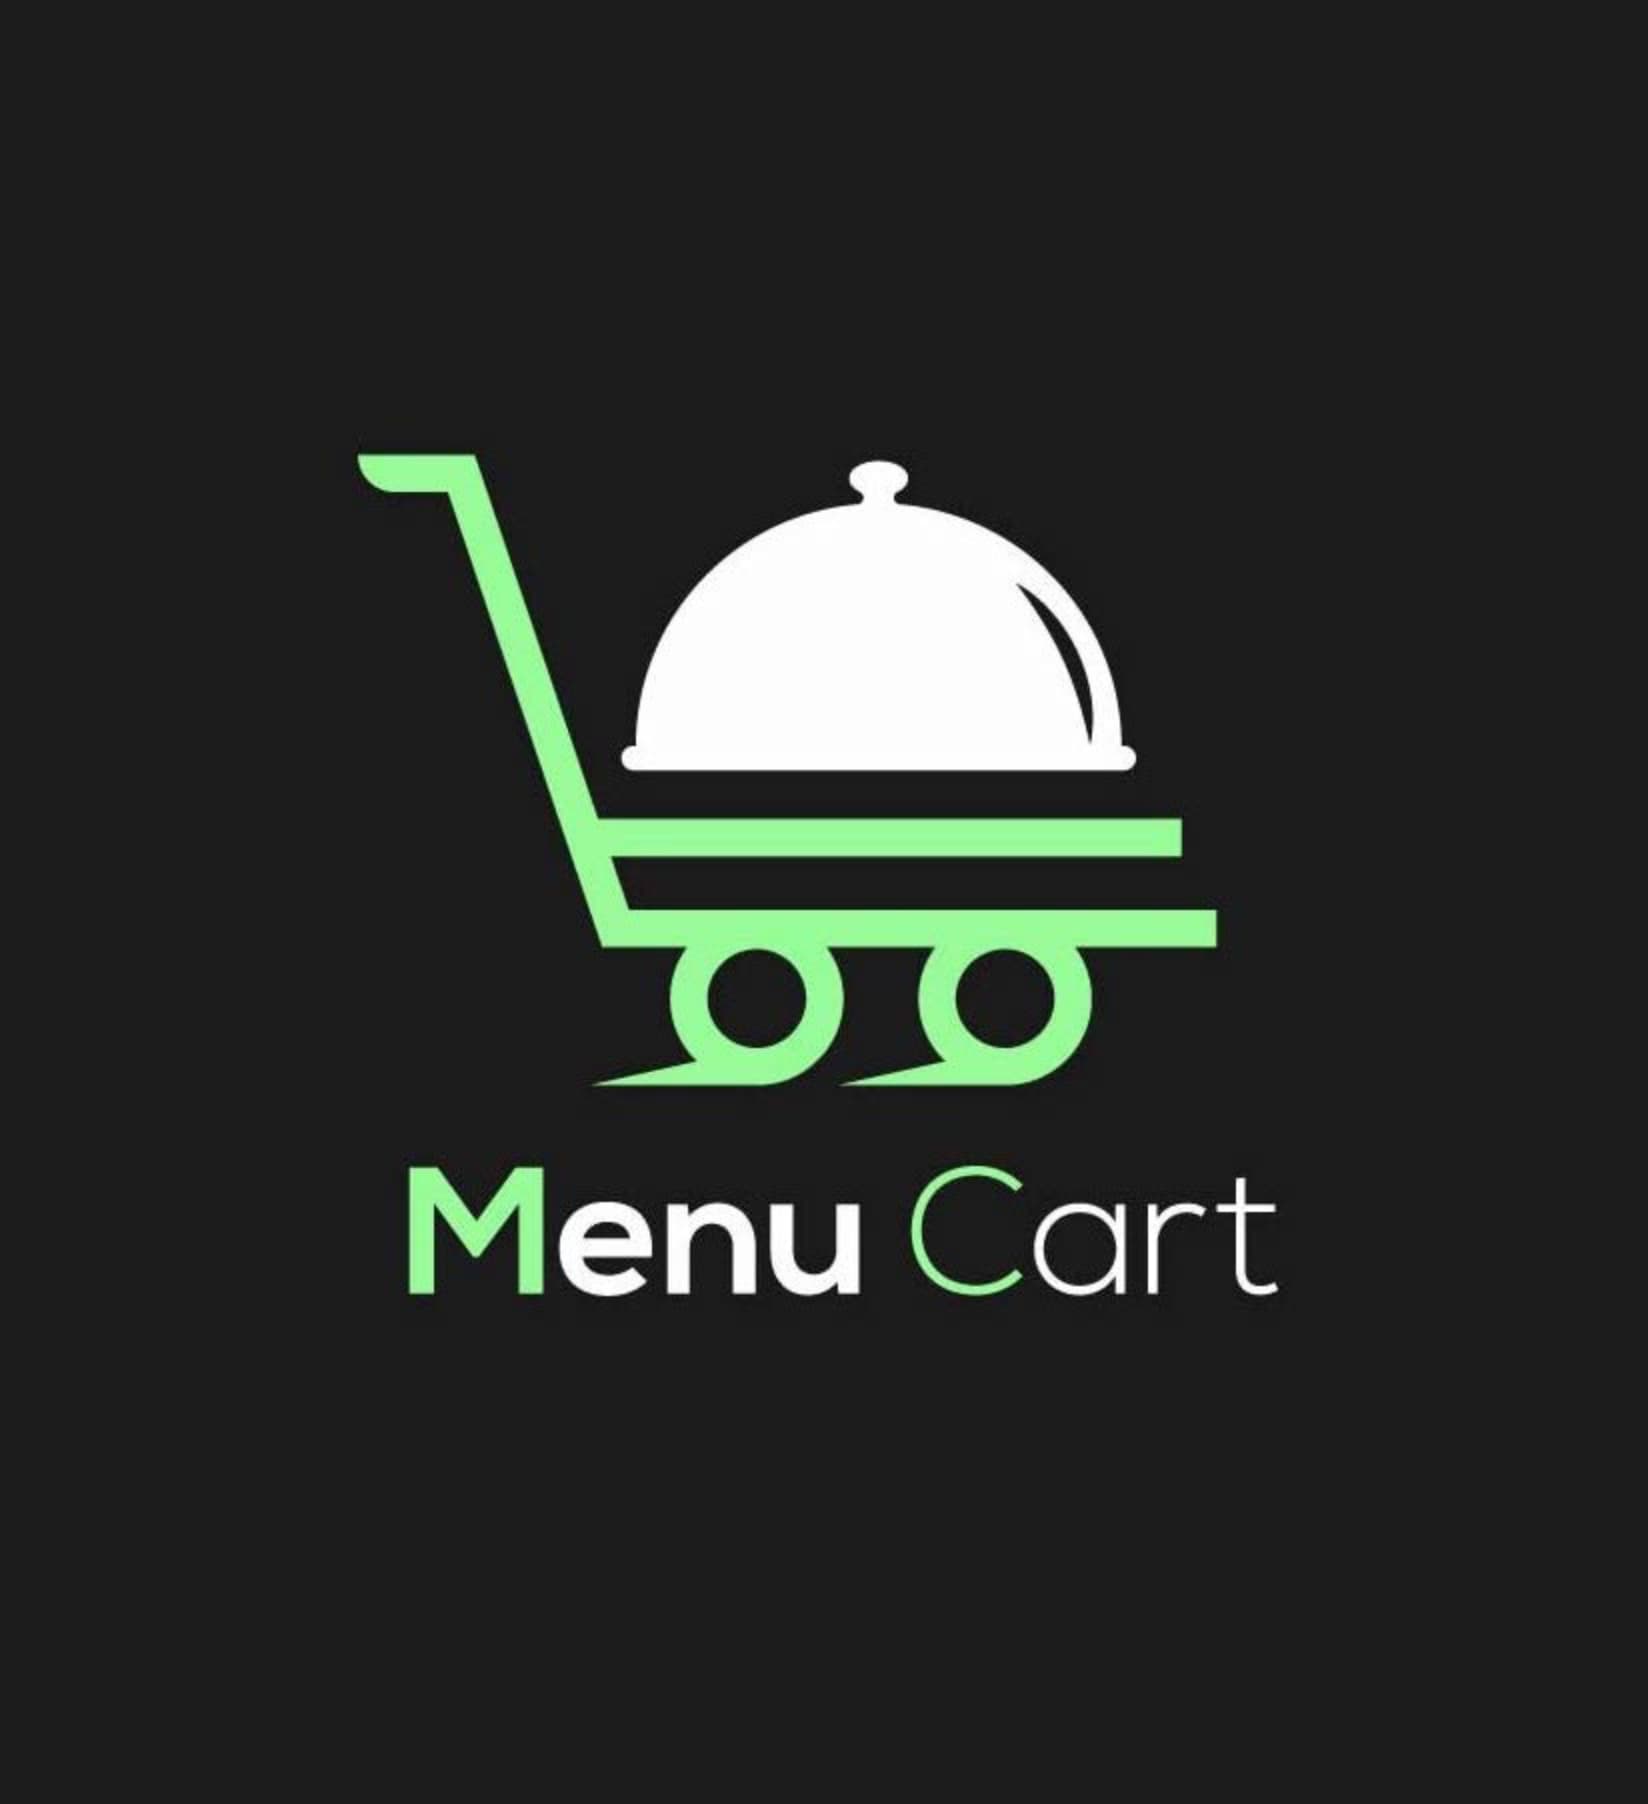 Menu Cart Pvt Ltd's logo